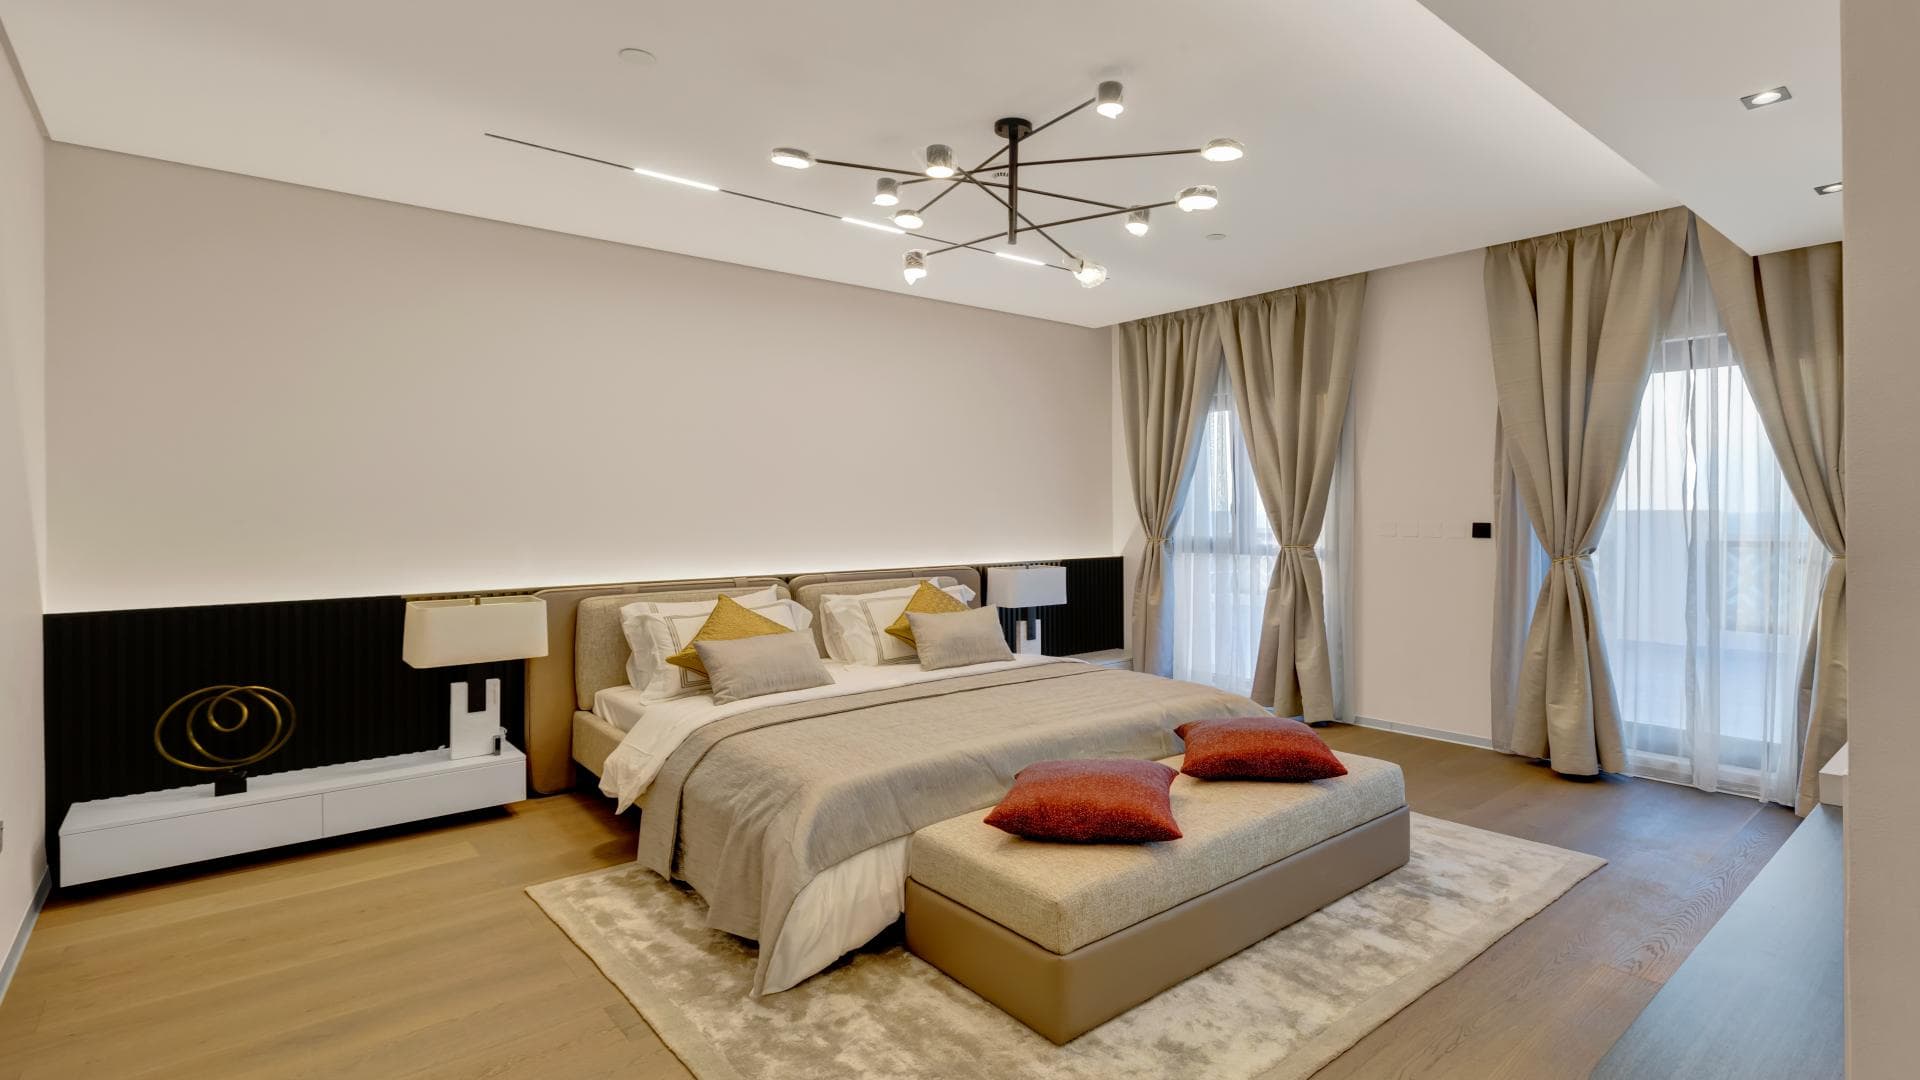 6 Bedroom Penthouse For Sale Kingdom Of Sheba Lp37220 24b0b0abce27f80.jpg